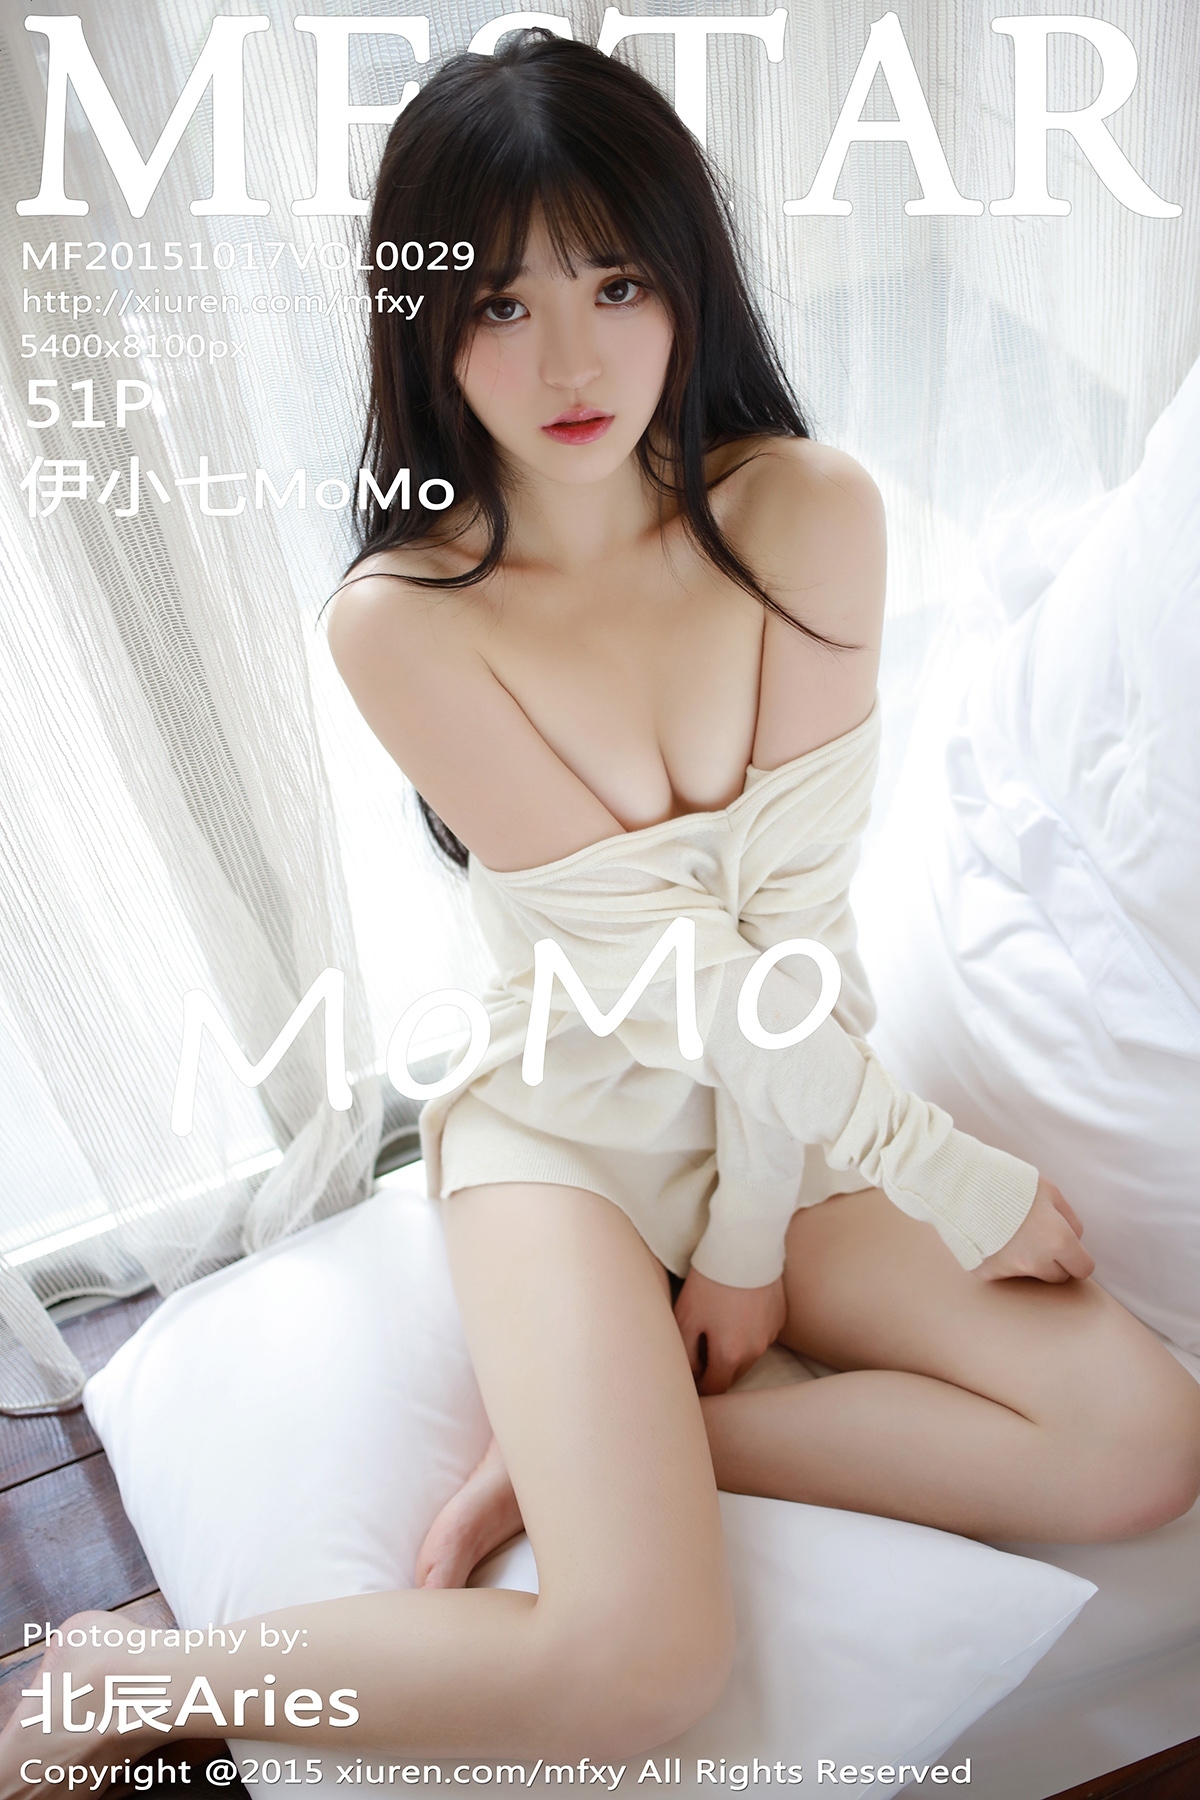 [mfstar model college] 2015.10.17 vol.029 the first photo shoot by Yi Xiaoqi momo